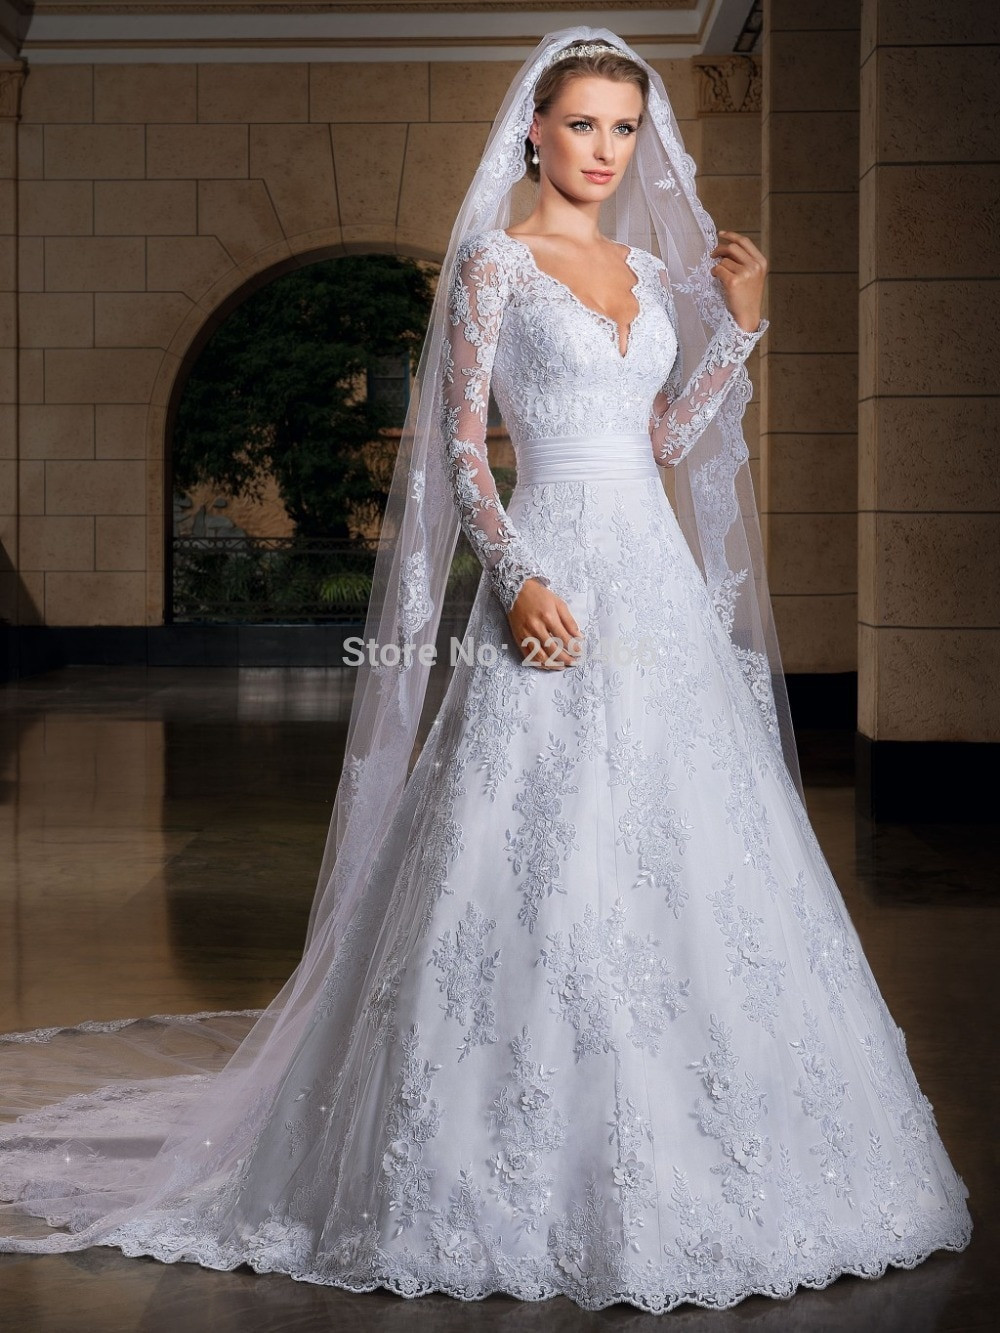 Veil For Wedding Dress
 Free shipping WEdding Dress Bridal Veil Wedding